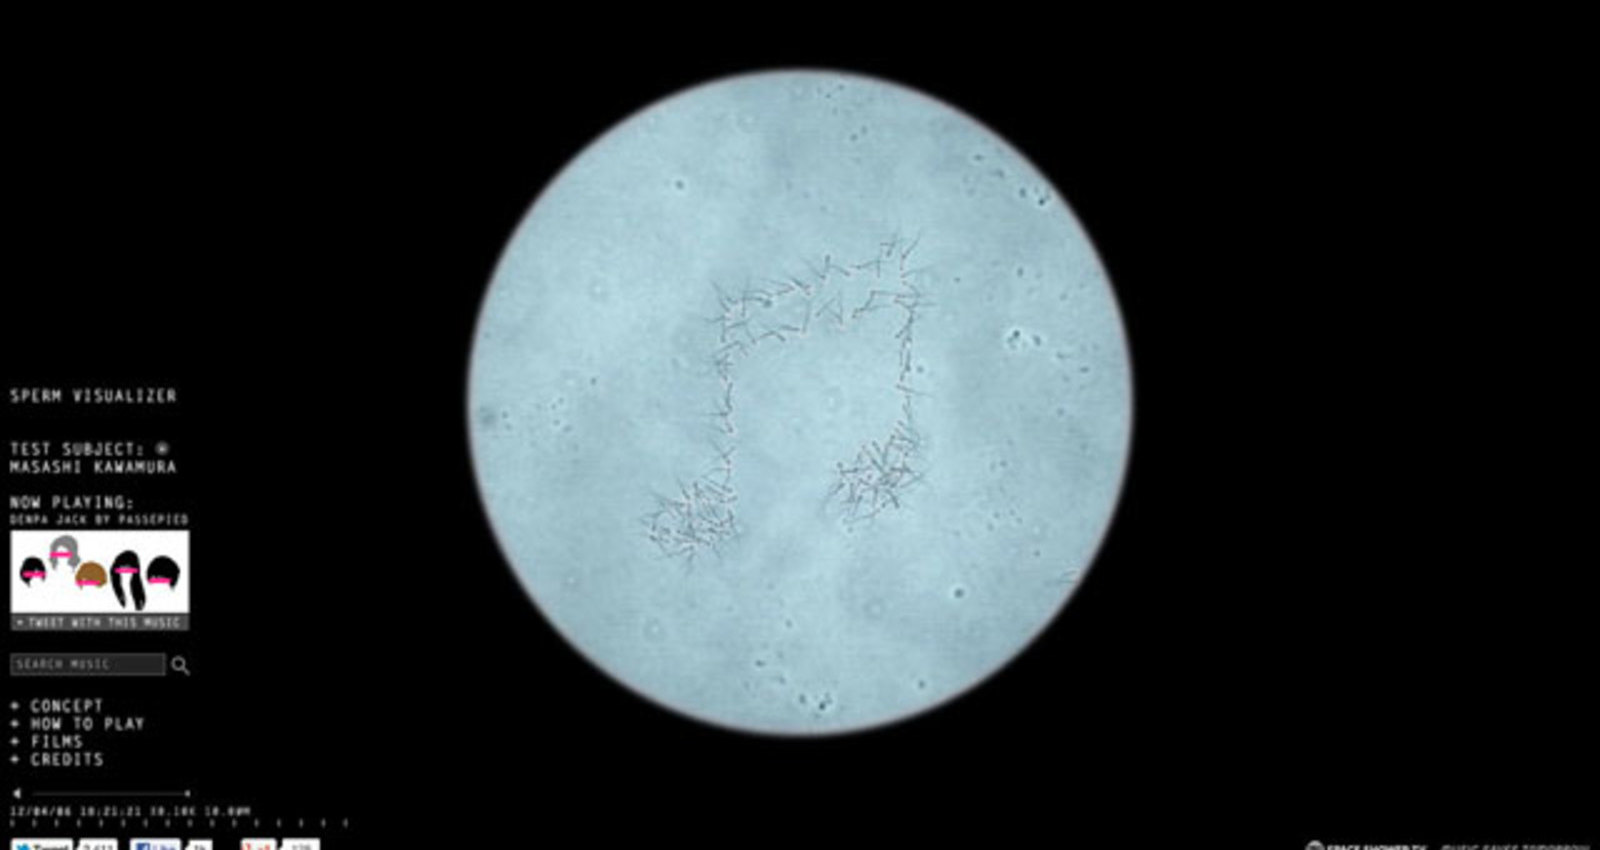 Sperm Visualizer